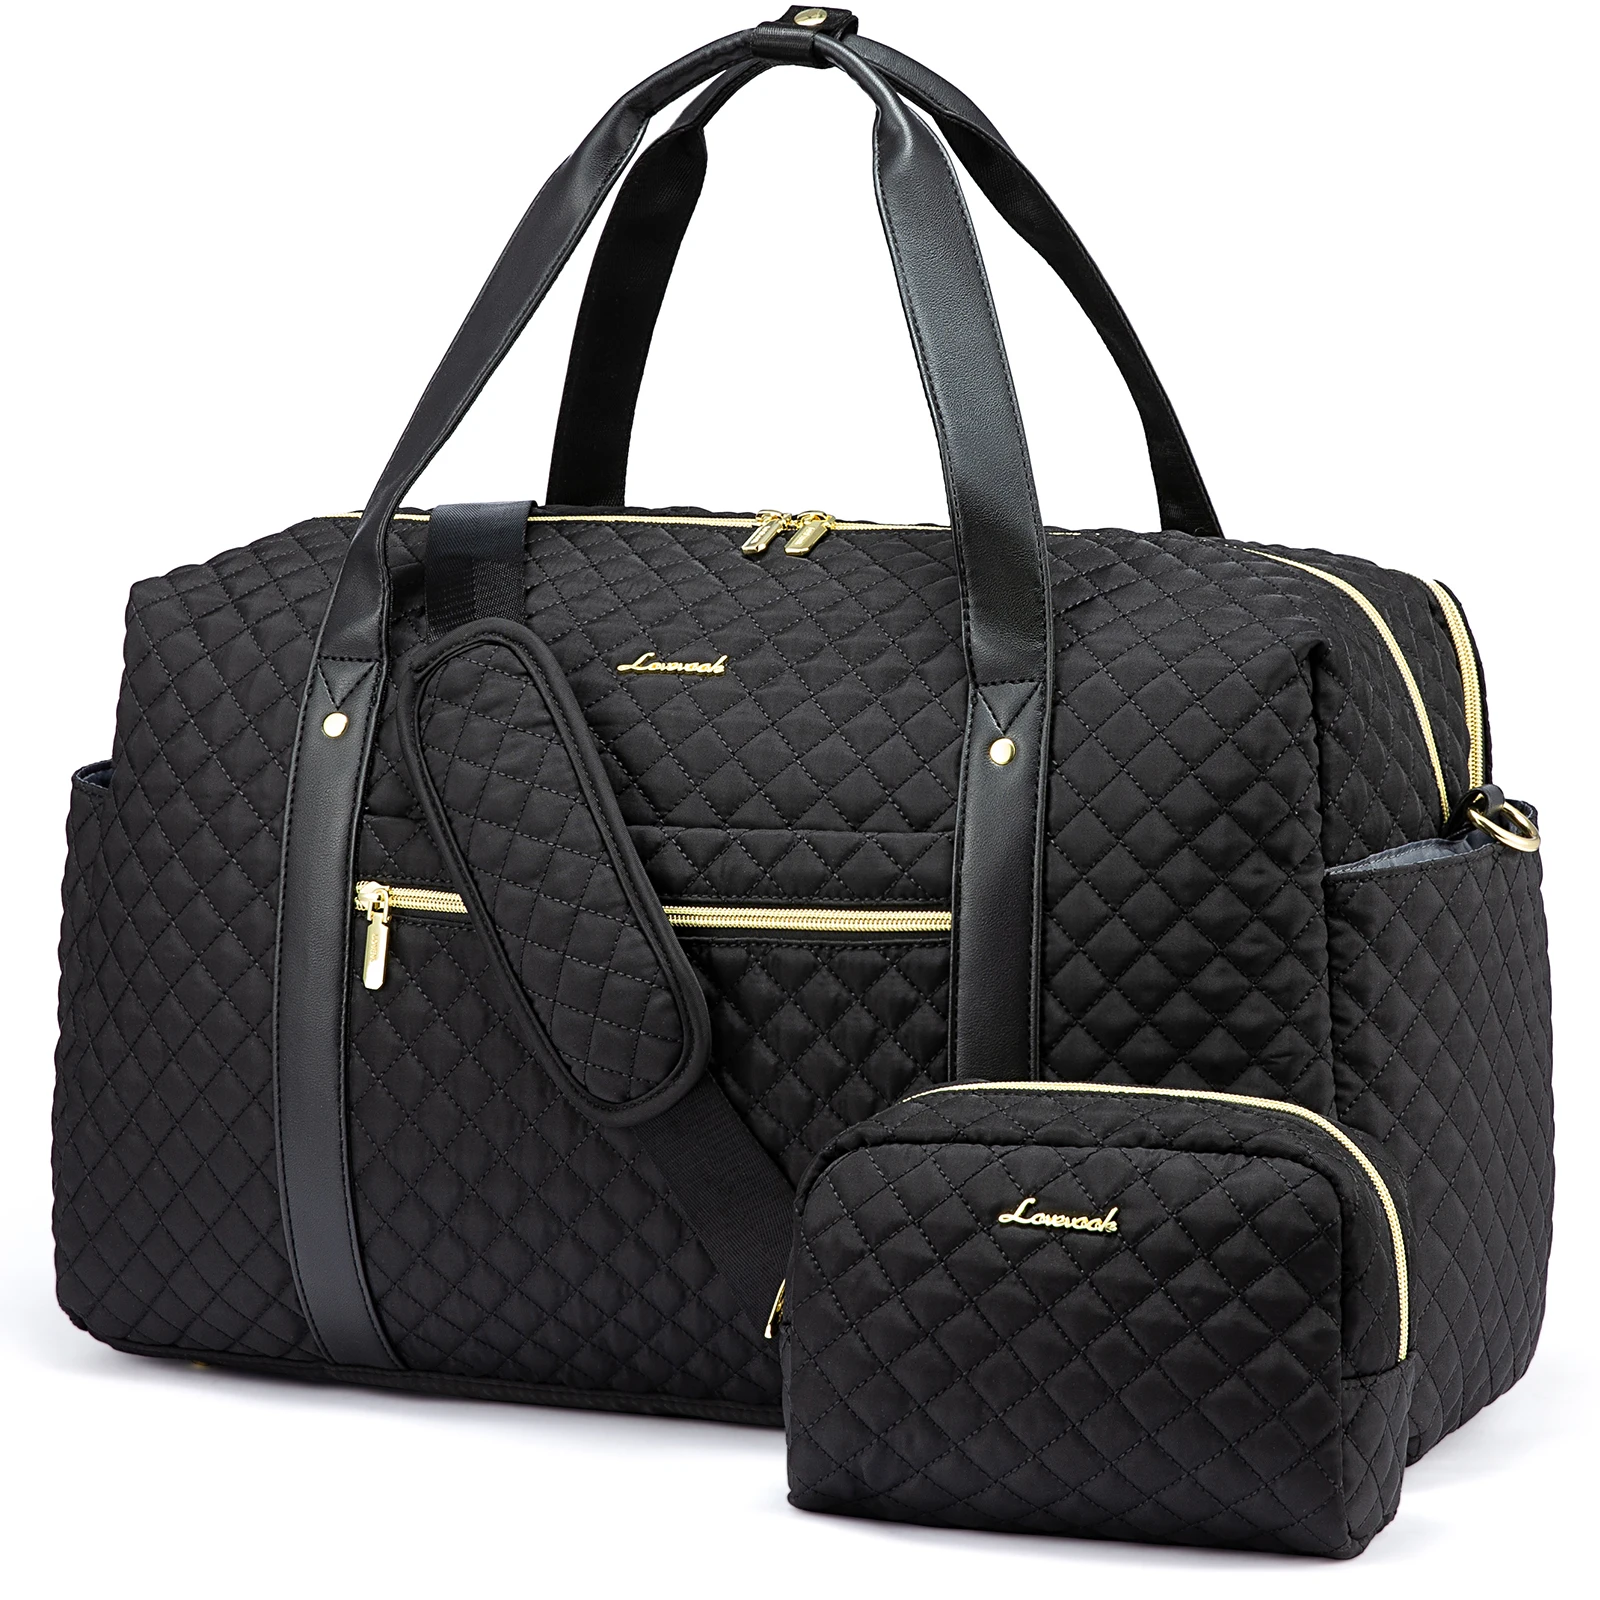 

Wholesale LOVEVOOK Waterproof Outdoor Fitness Sports Gym Travel Bags Duffel Luggage Bag Weekender Overnight Bag for Men Women